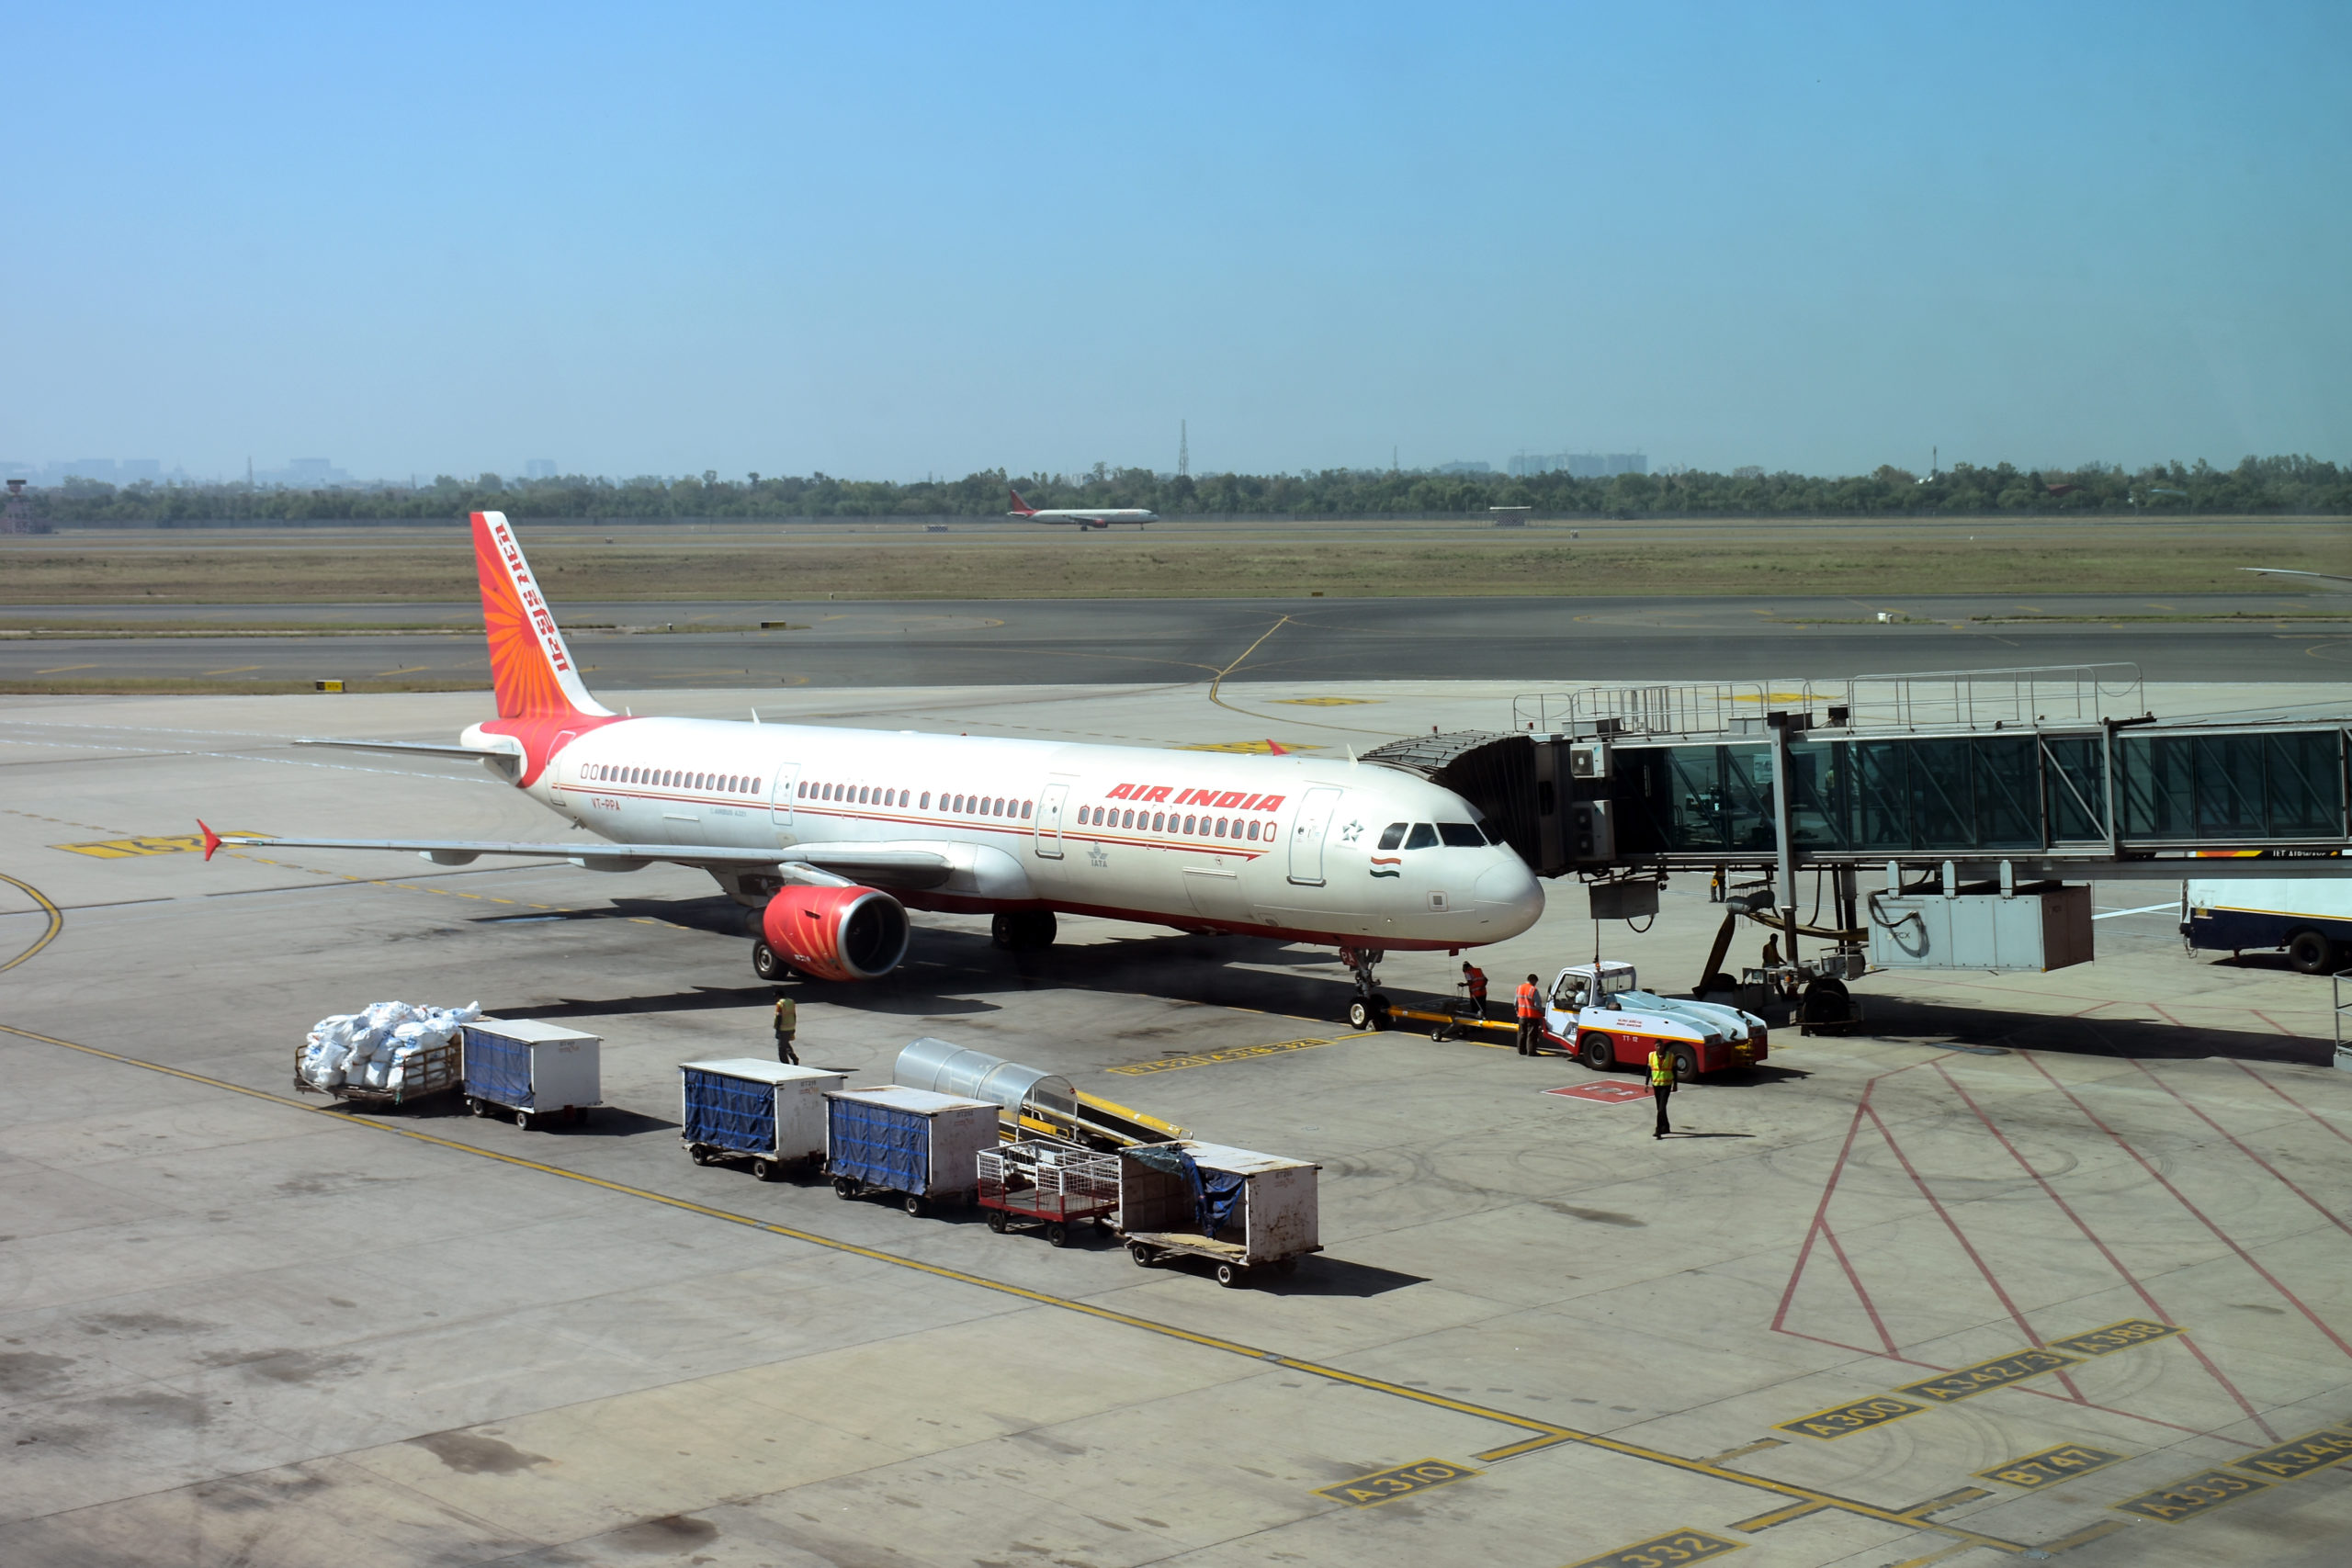 Flight ban to India extended till September 21st